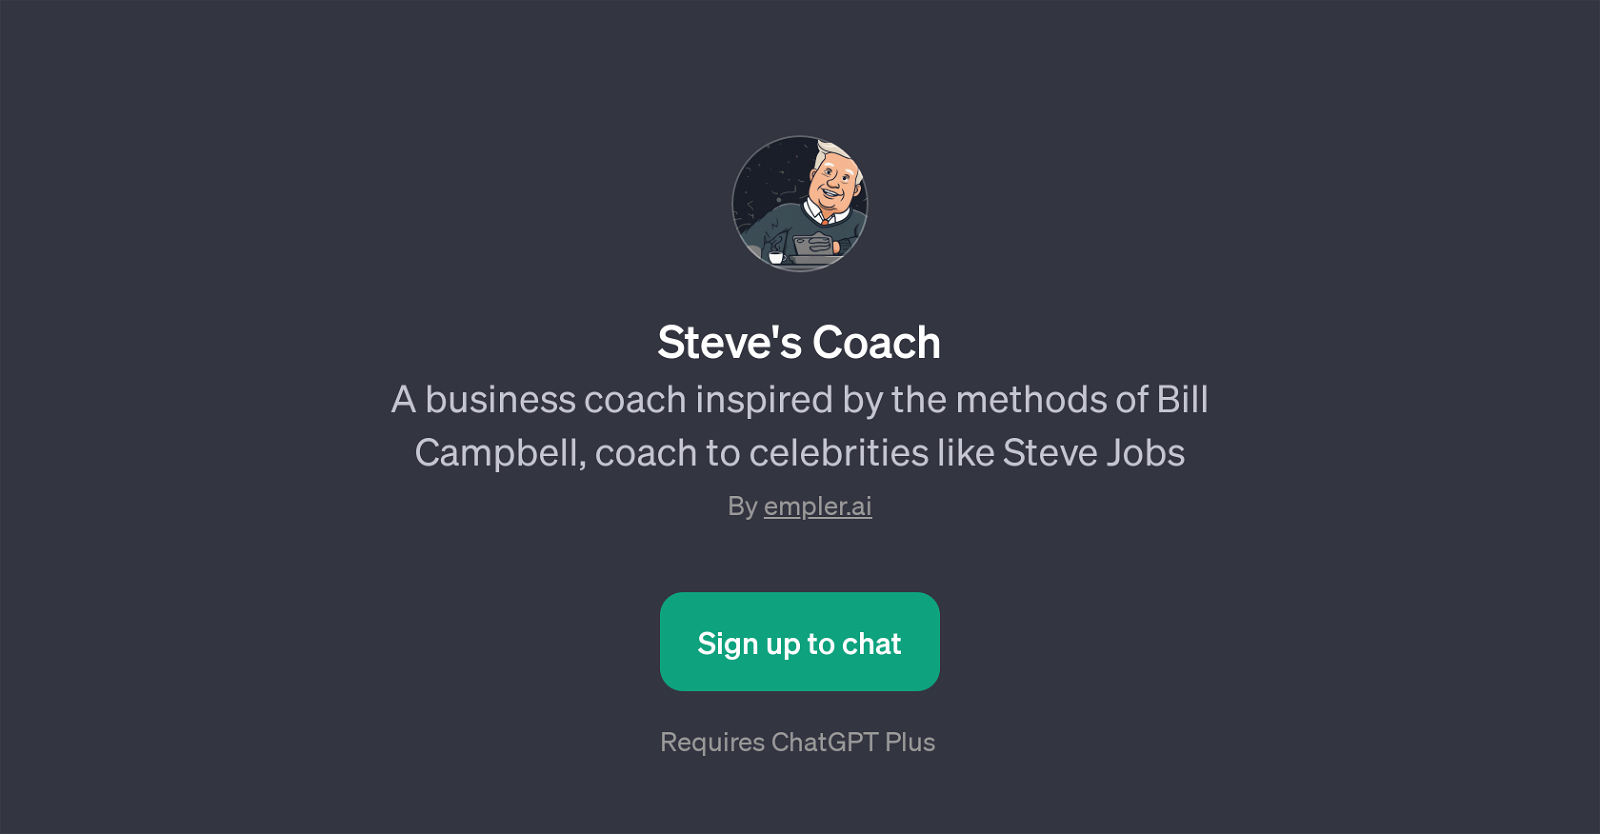 Steve's Coach website